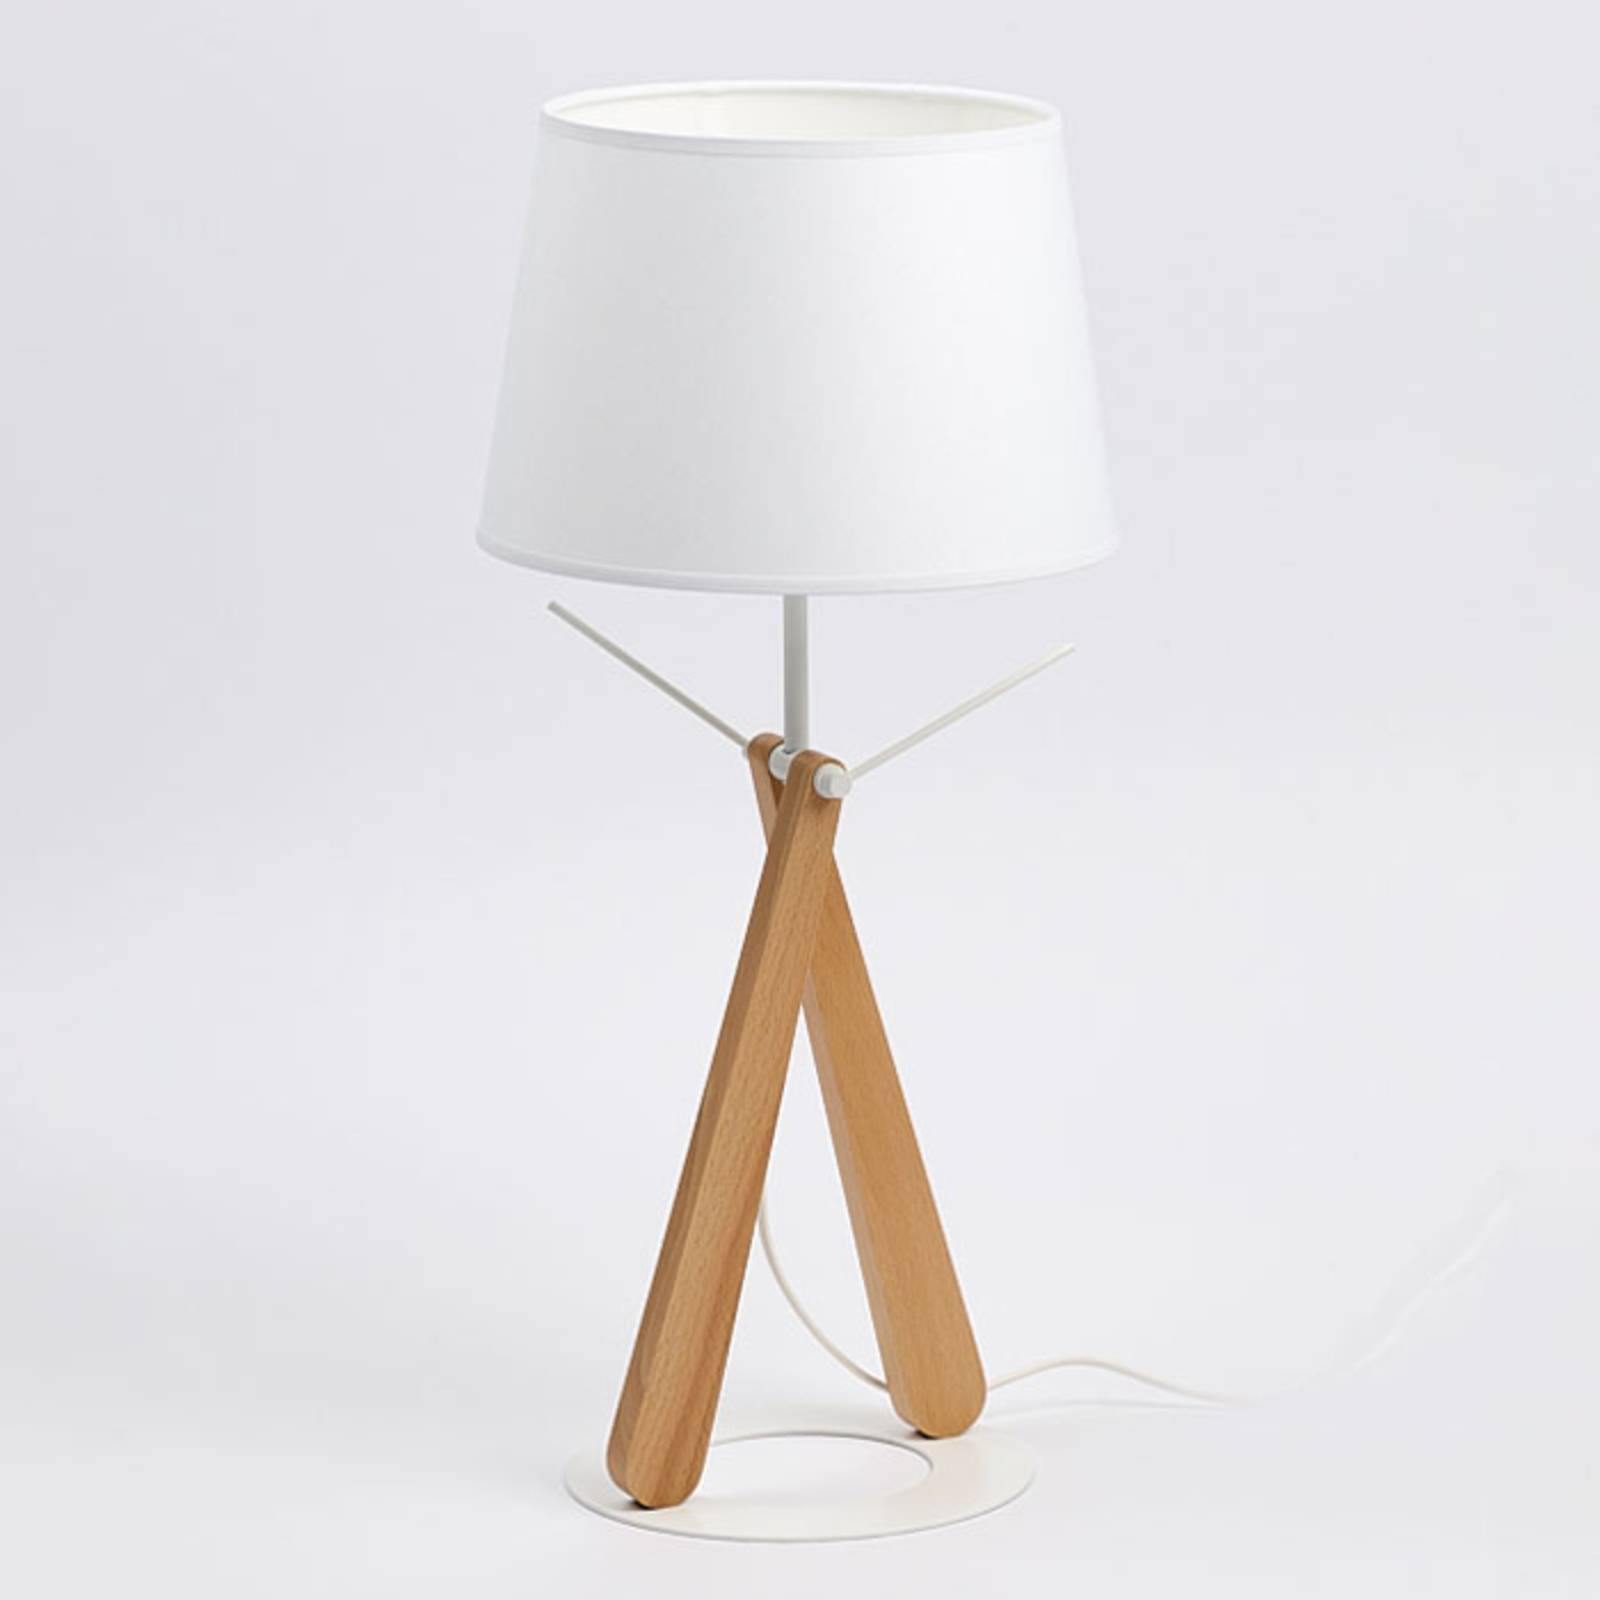 Zazou LT table lamp white/light wood